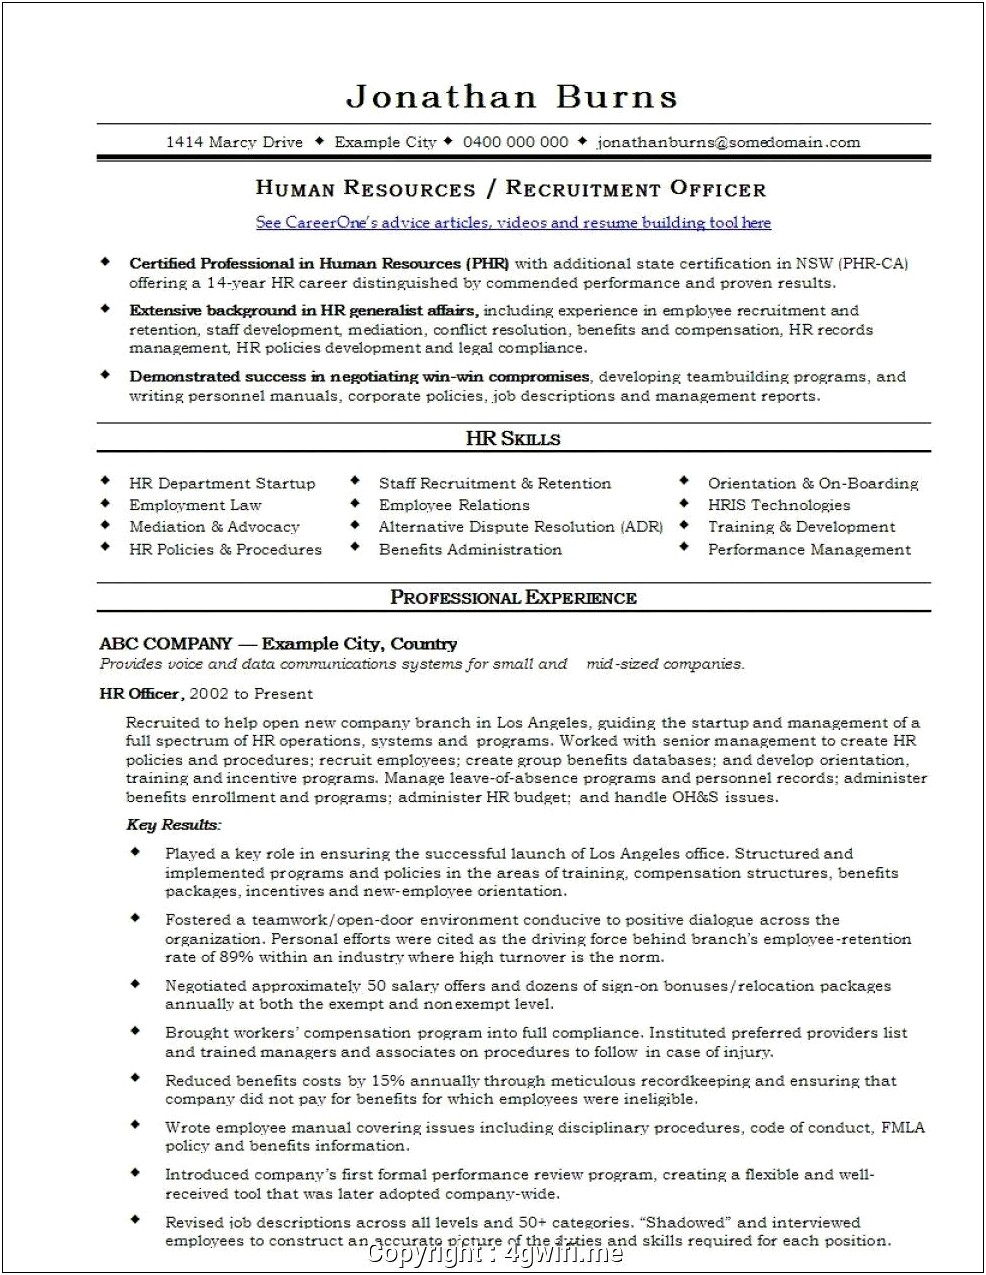 Human Resources Generalist Description For Resume